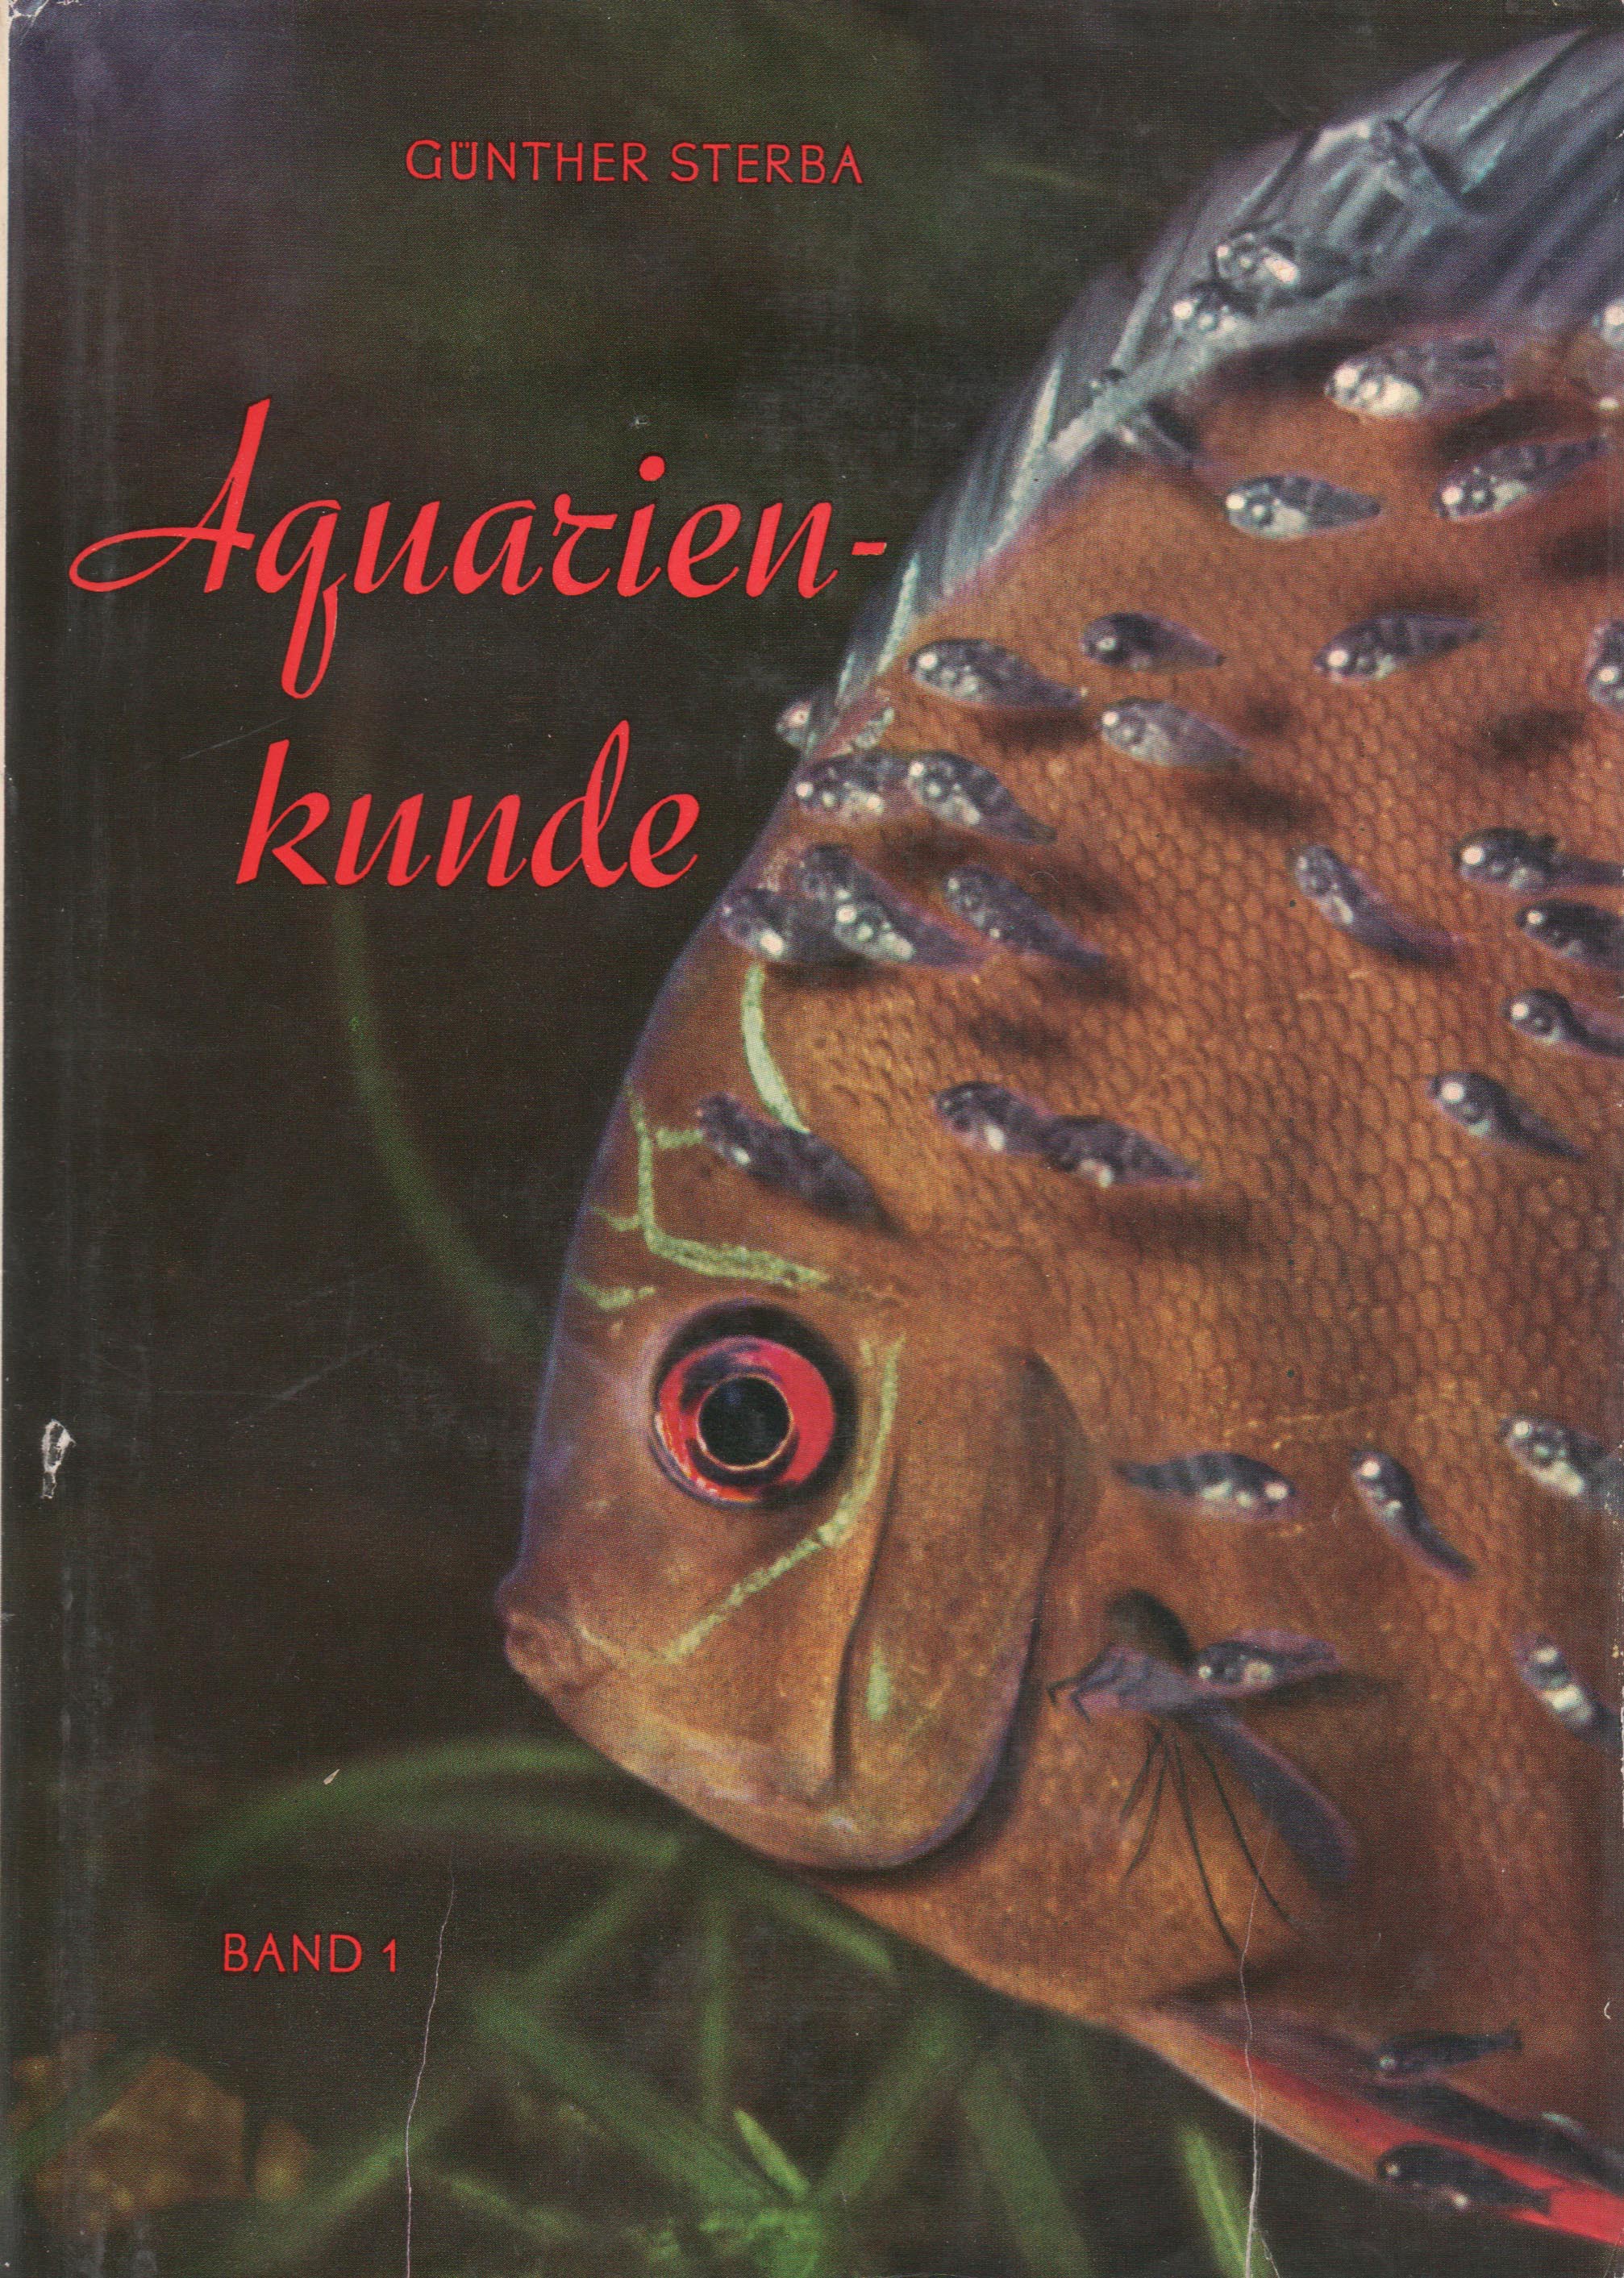 Aquarienkunde (Günther Sterba)